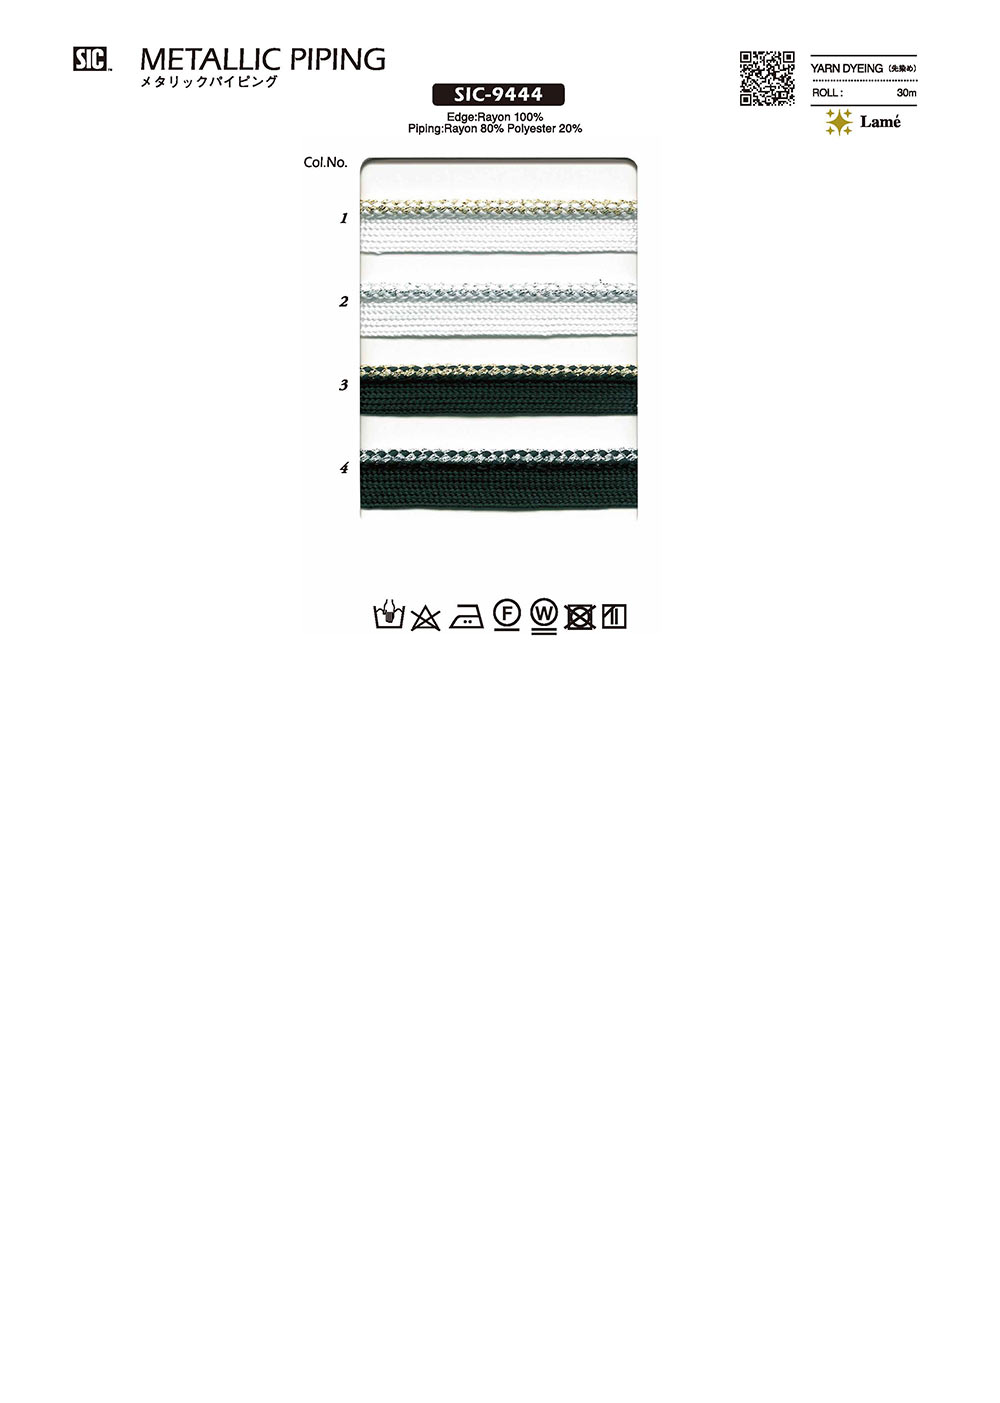 SIC-9444 Metallic Piping Tape[Ribbon Tape Cord] SHINDO(SIC)